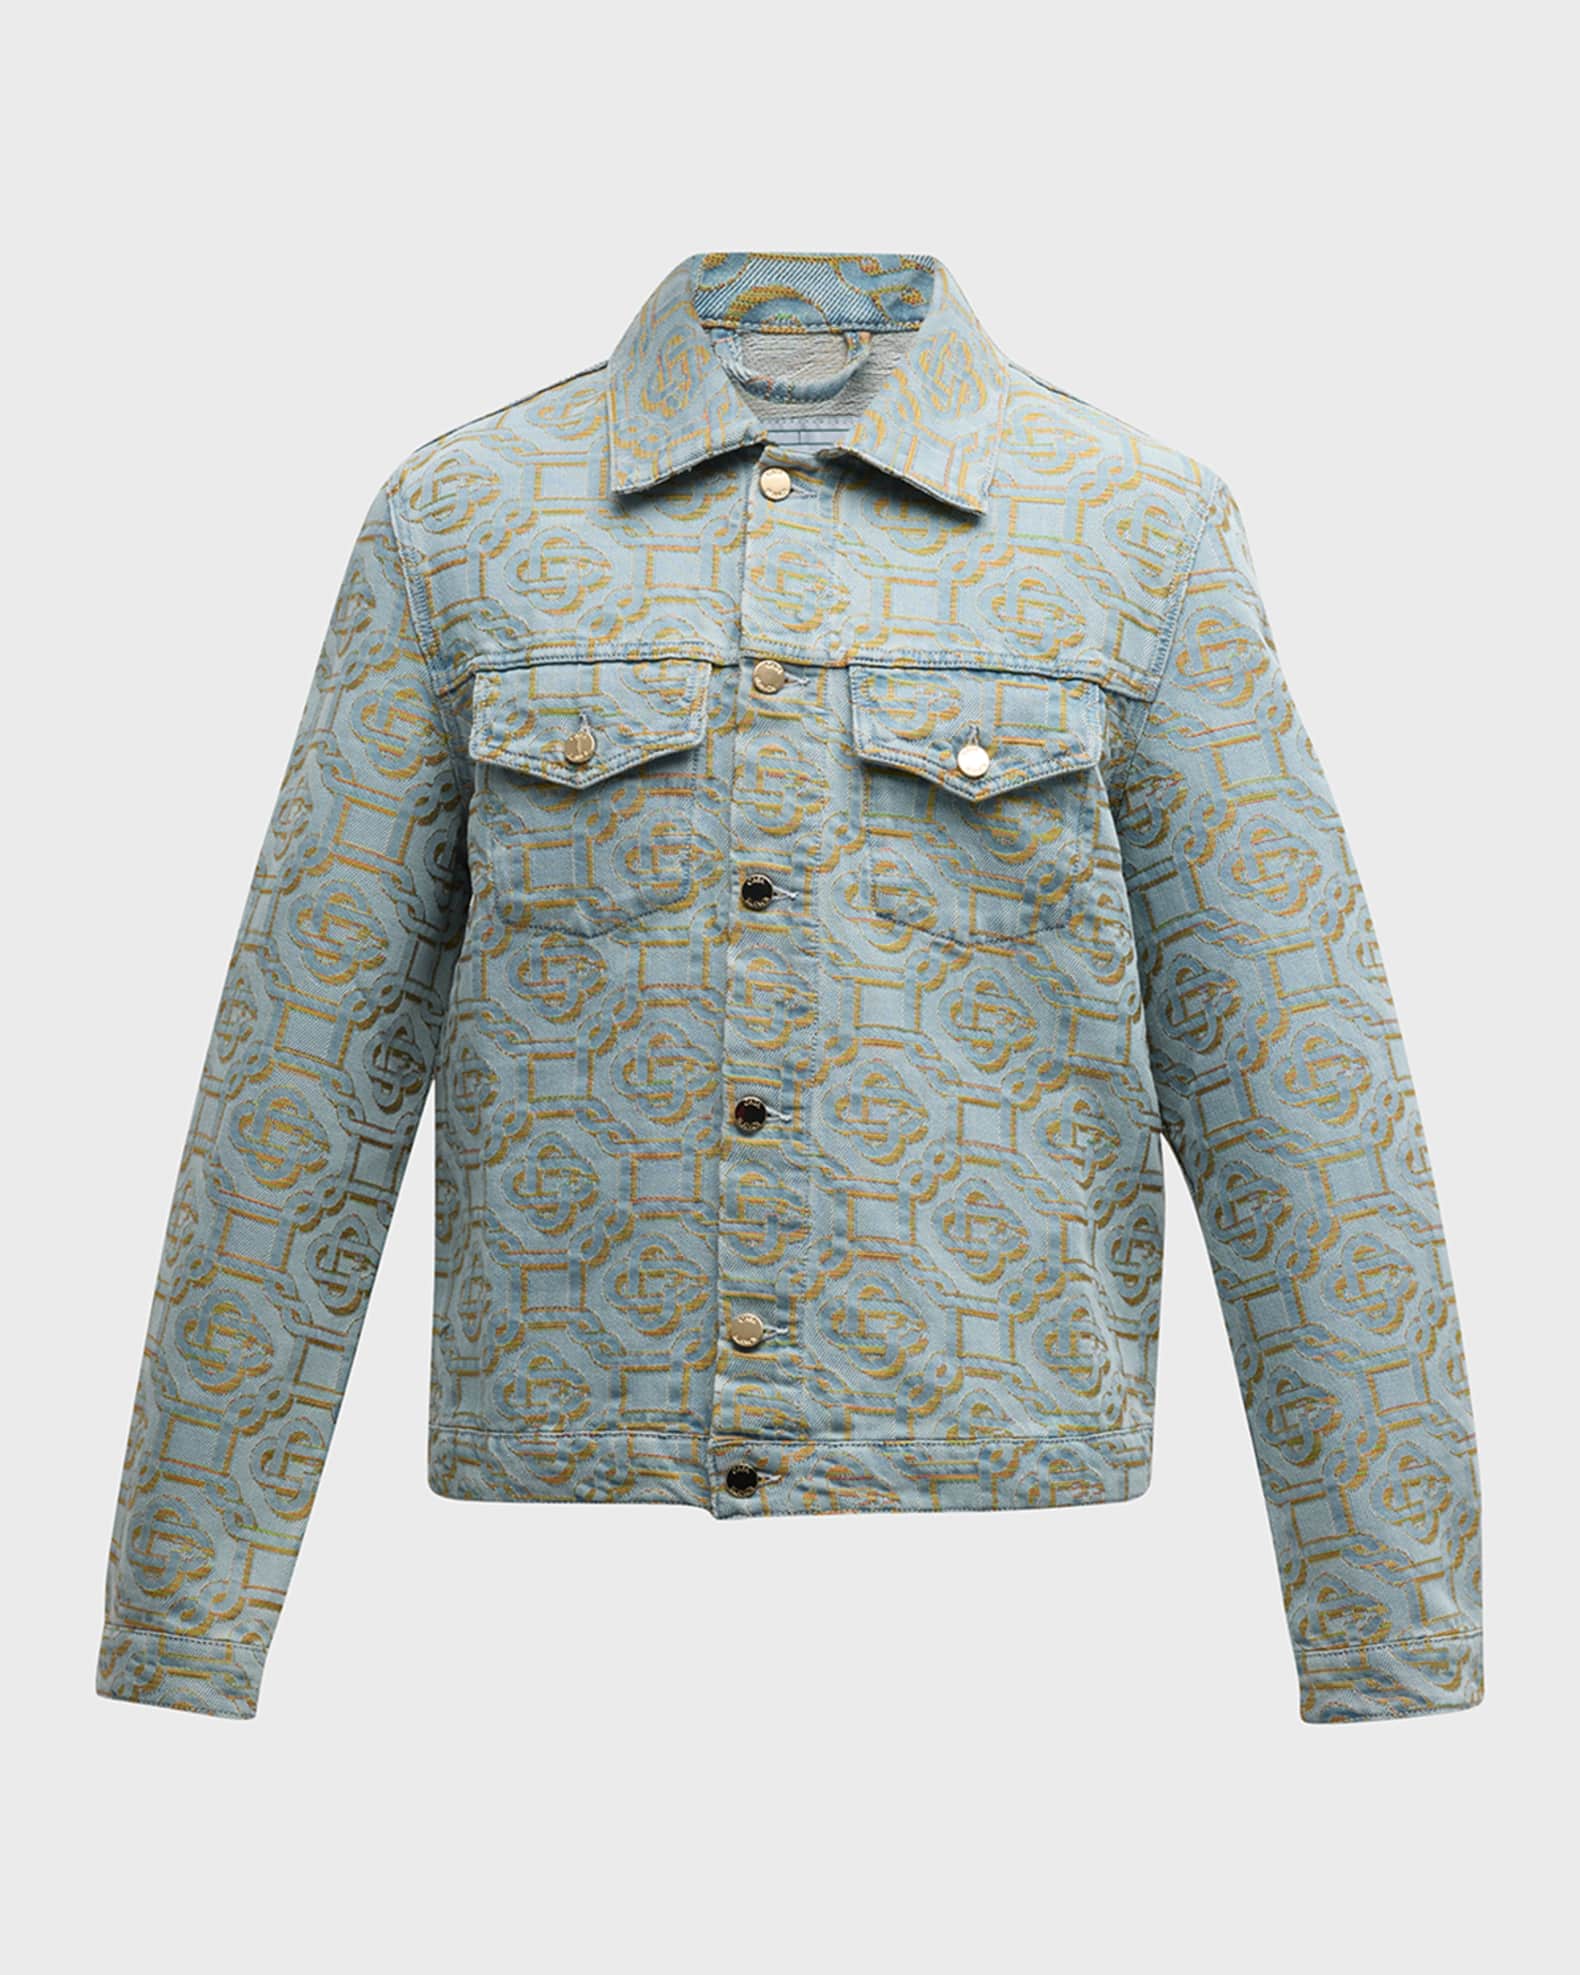 Casablanca Men's Monogram Jacquard Denim Jacket